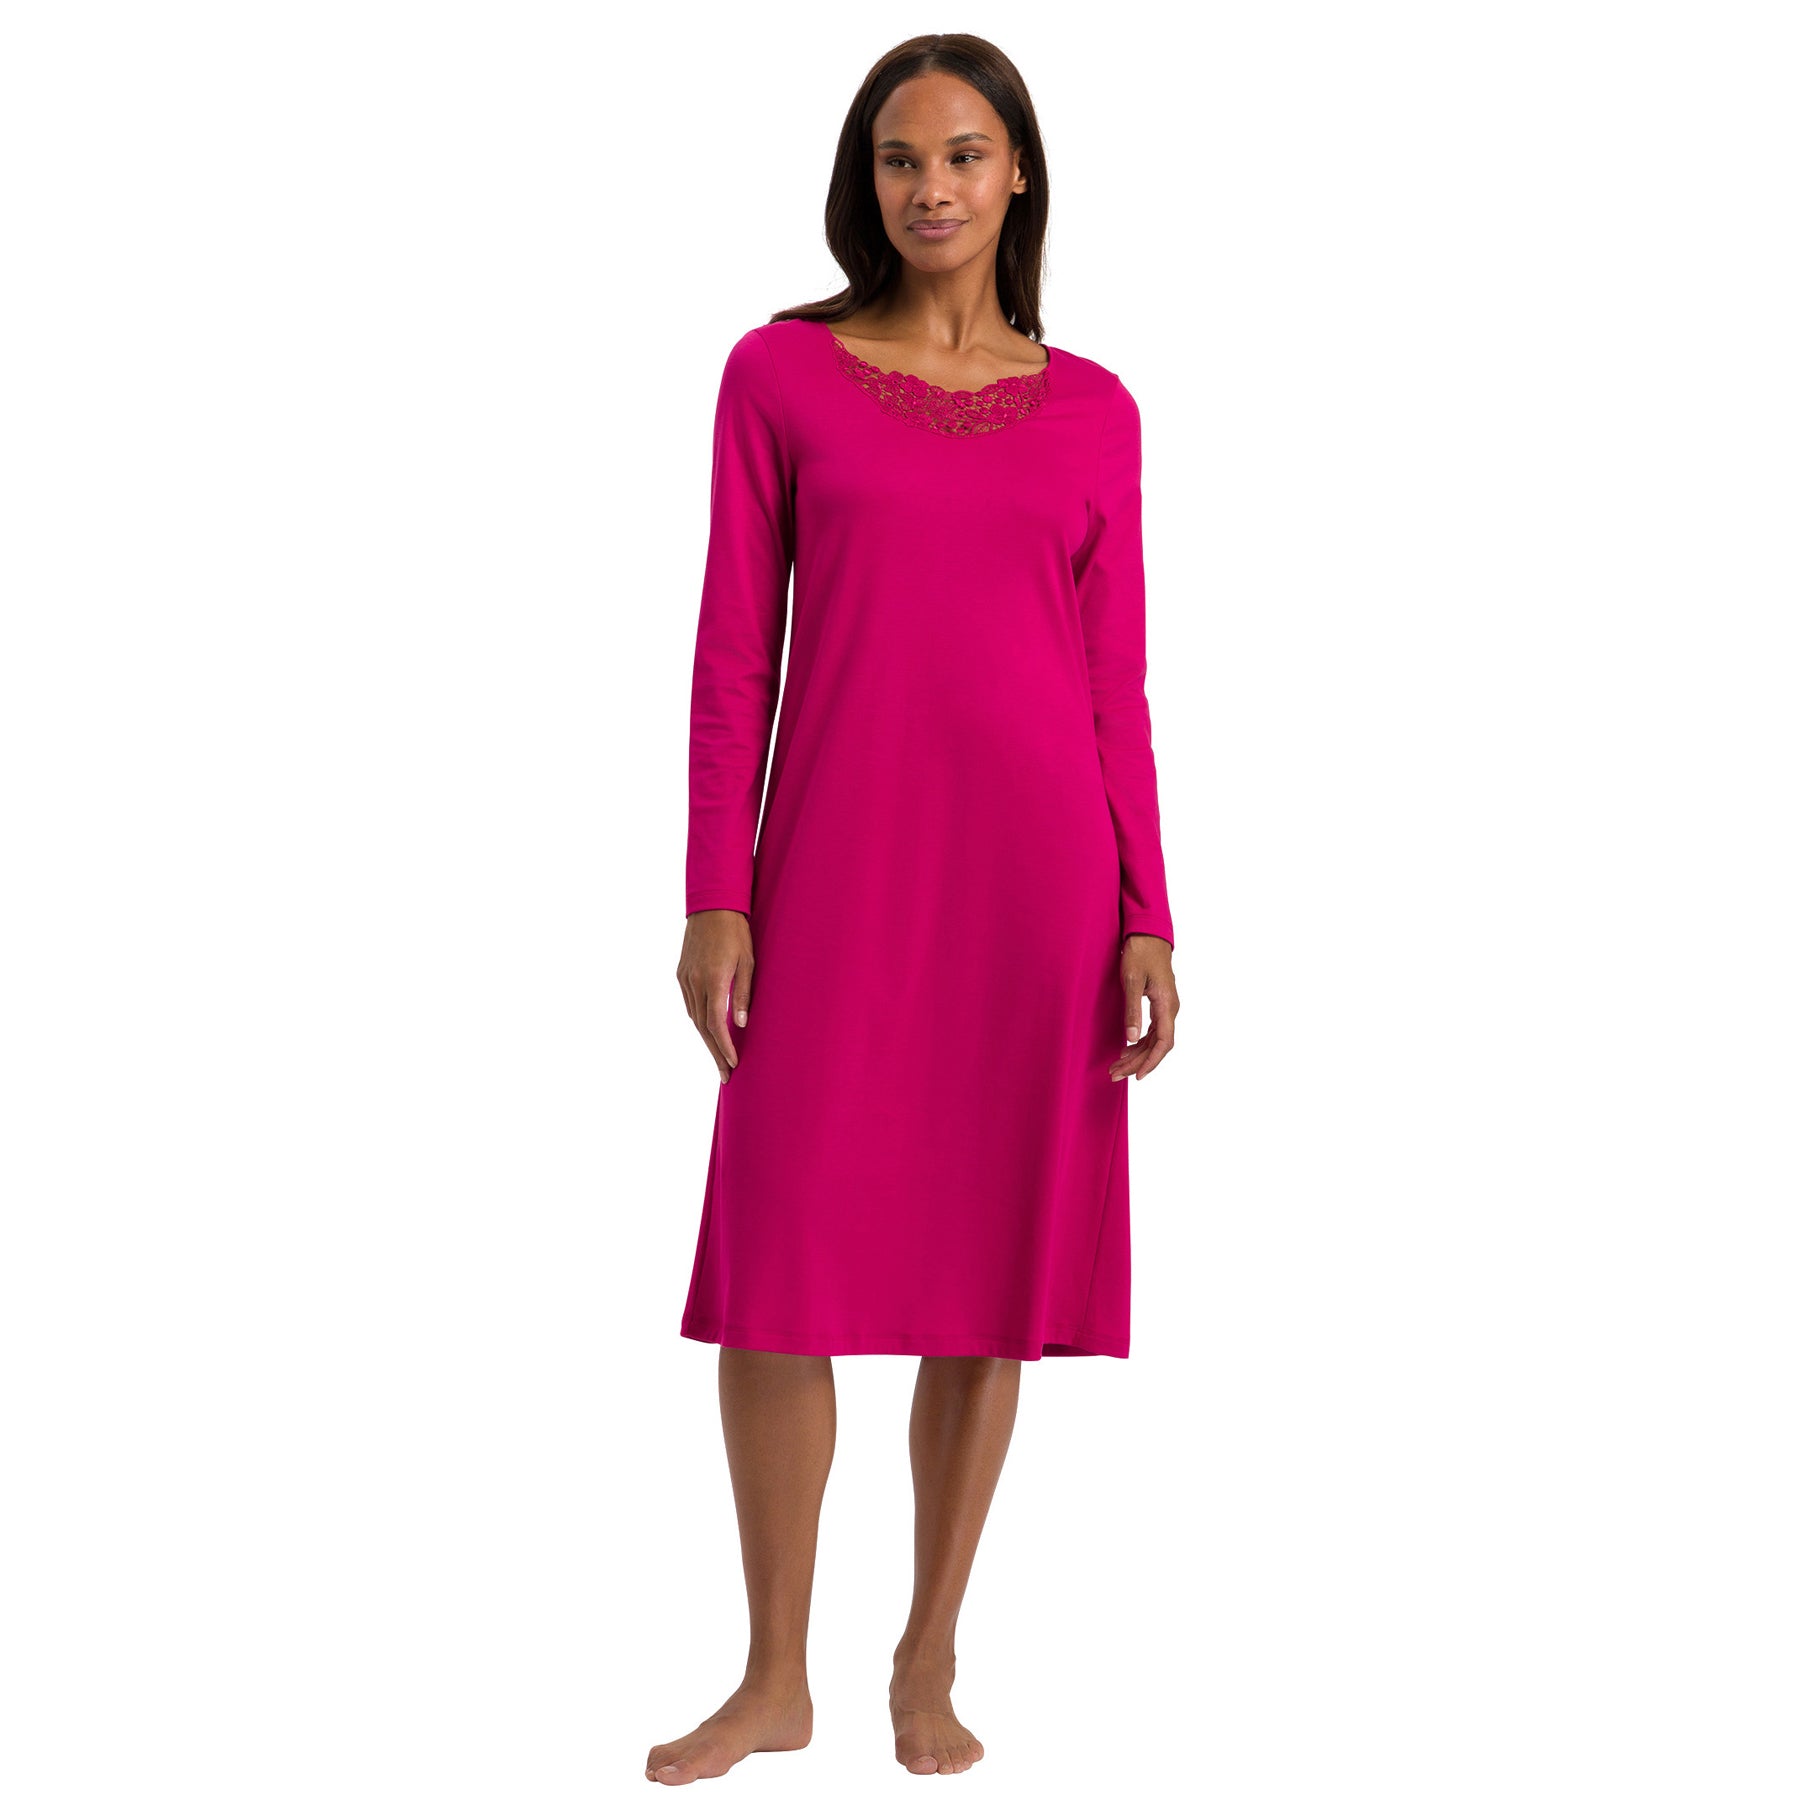 Buy Red Nightshirts&Nighties for Women by PHALIN Online